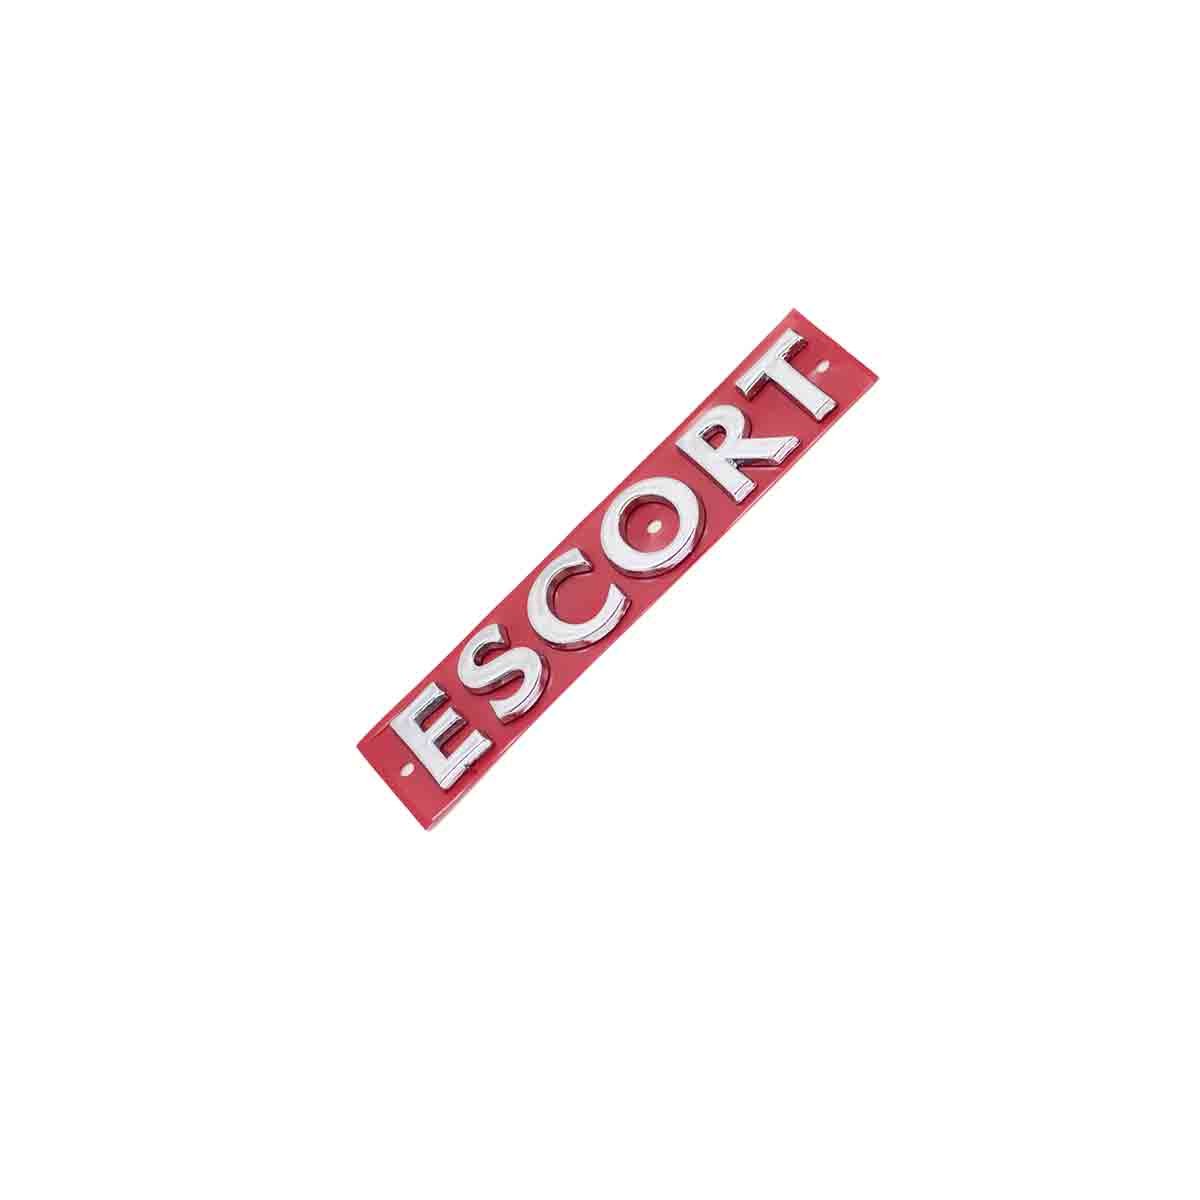 Emblema Escort 97/ Cromado